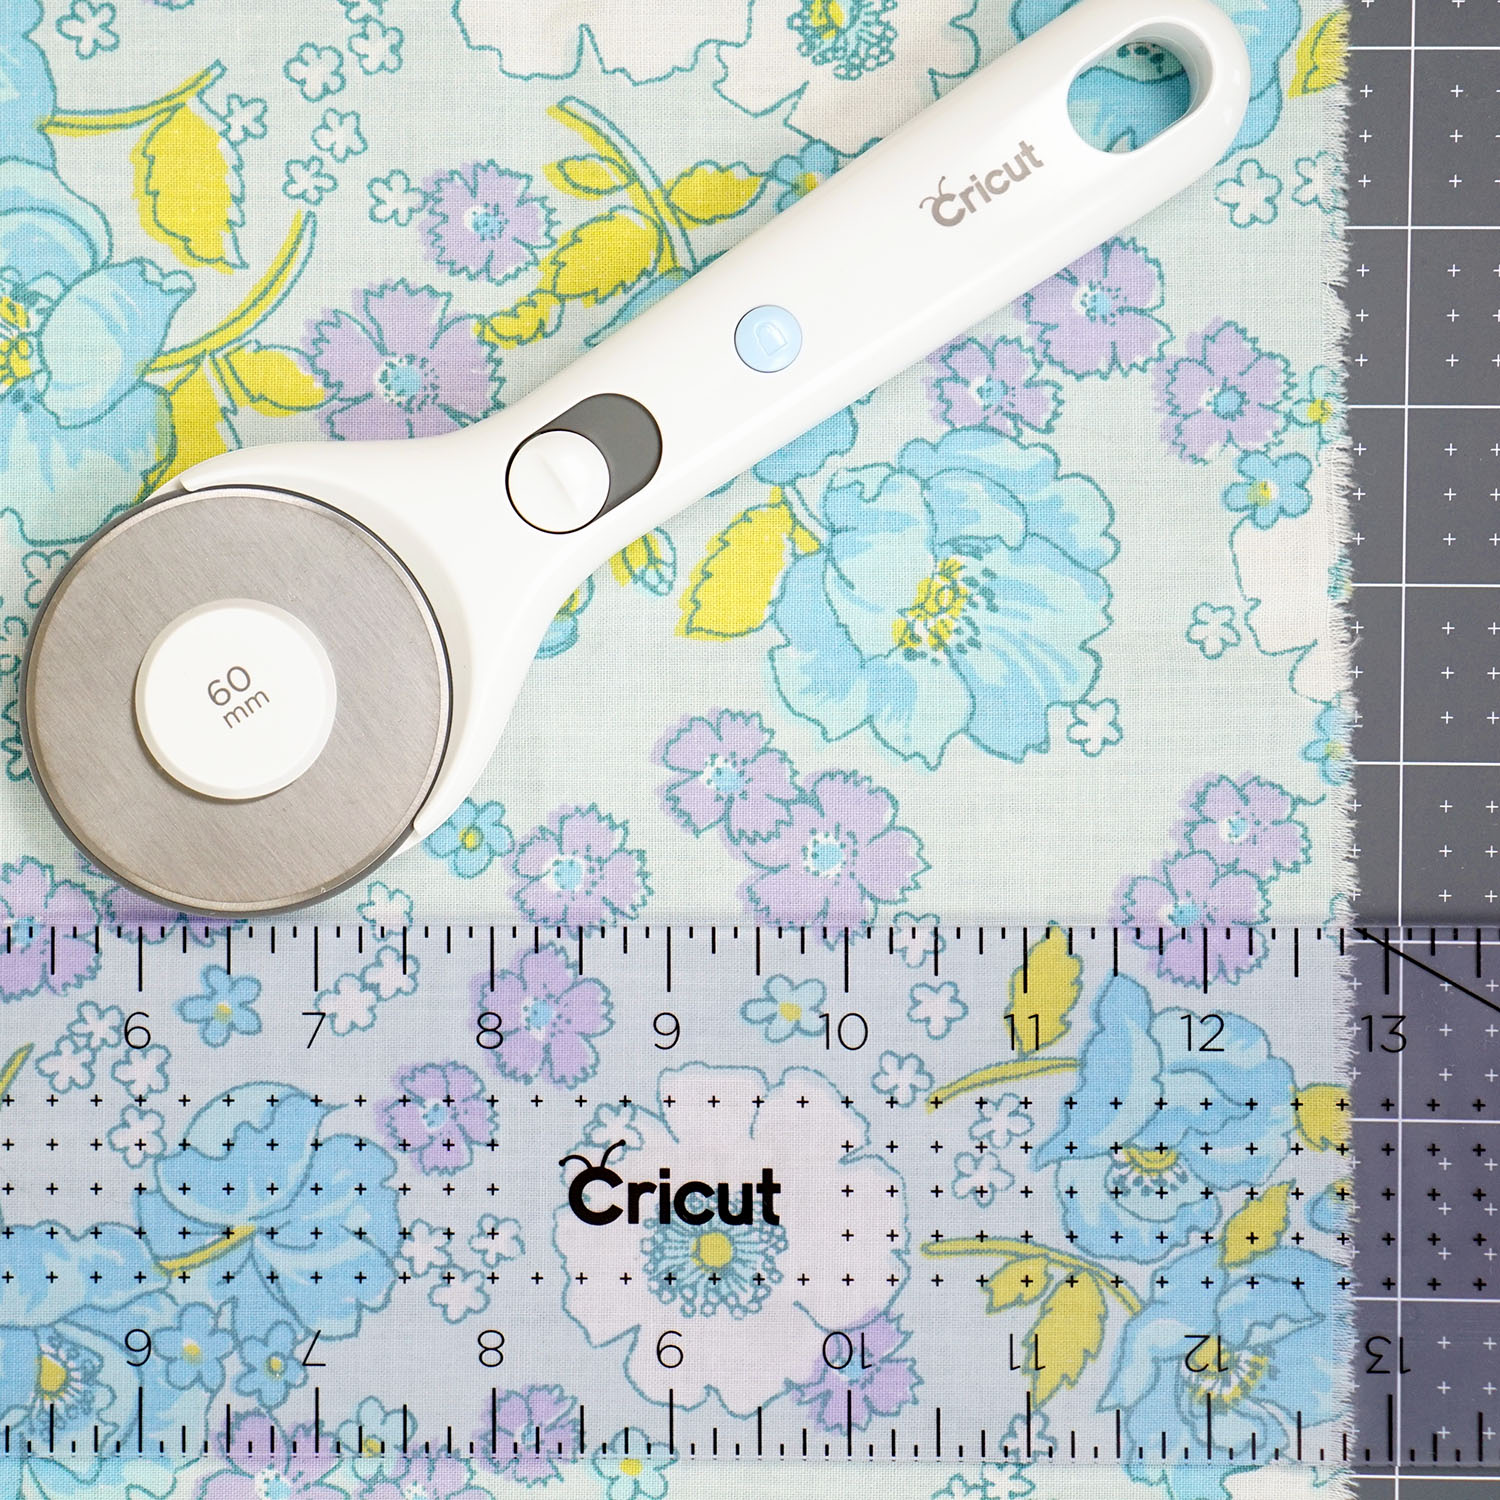 cricut rotary fabric cutting tool